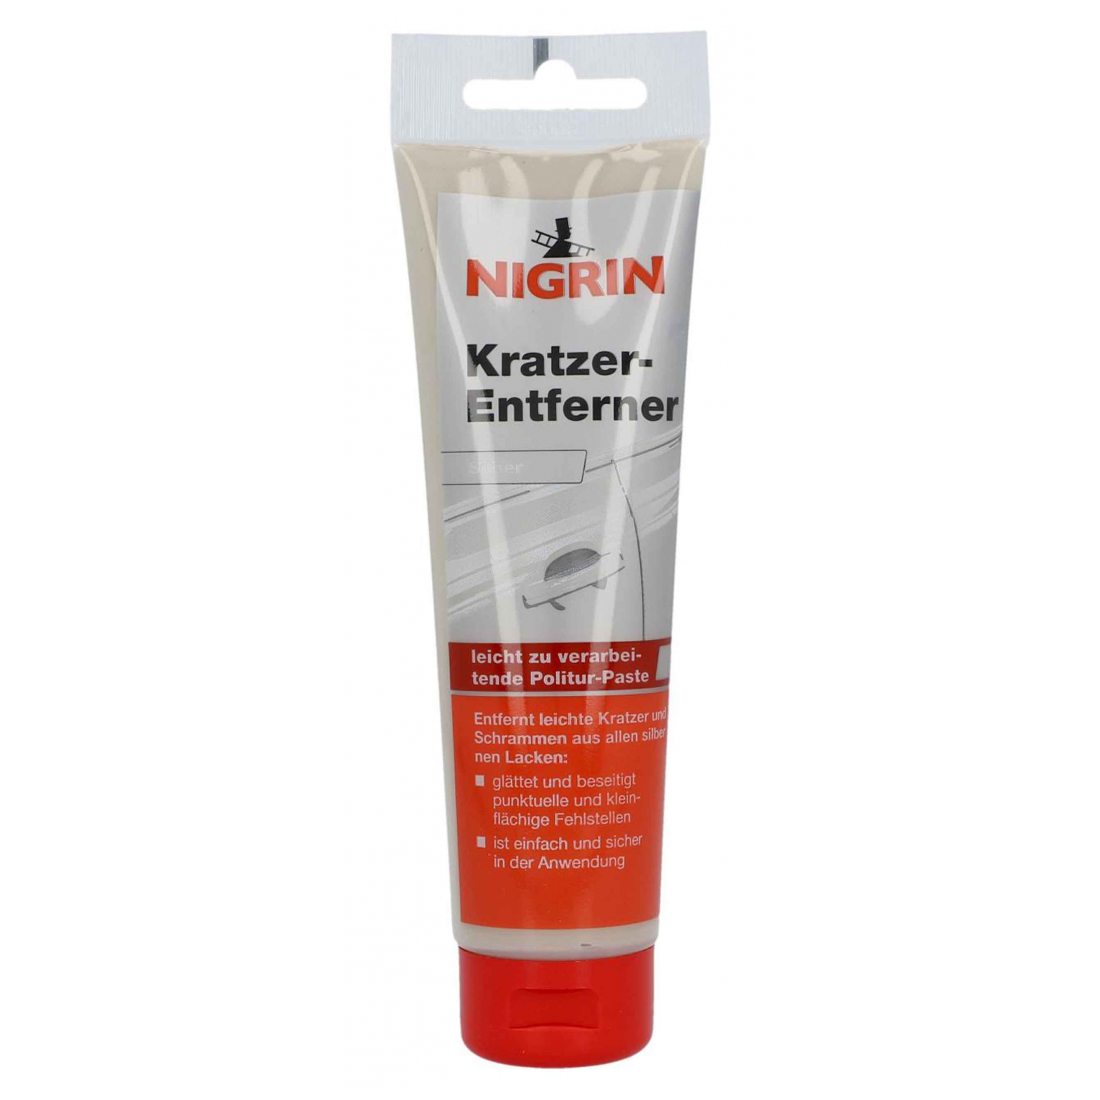 Nigrin Kratzer-Entferner silber 150 g 74257